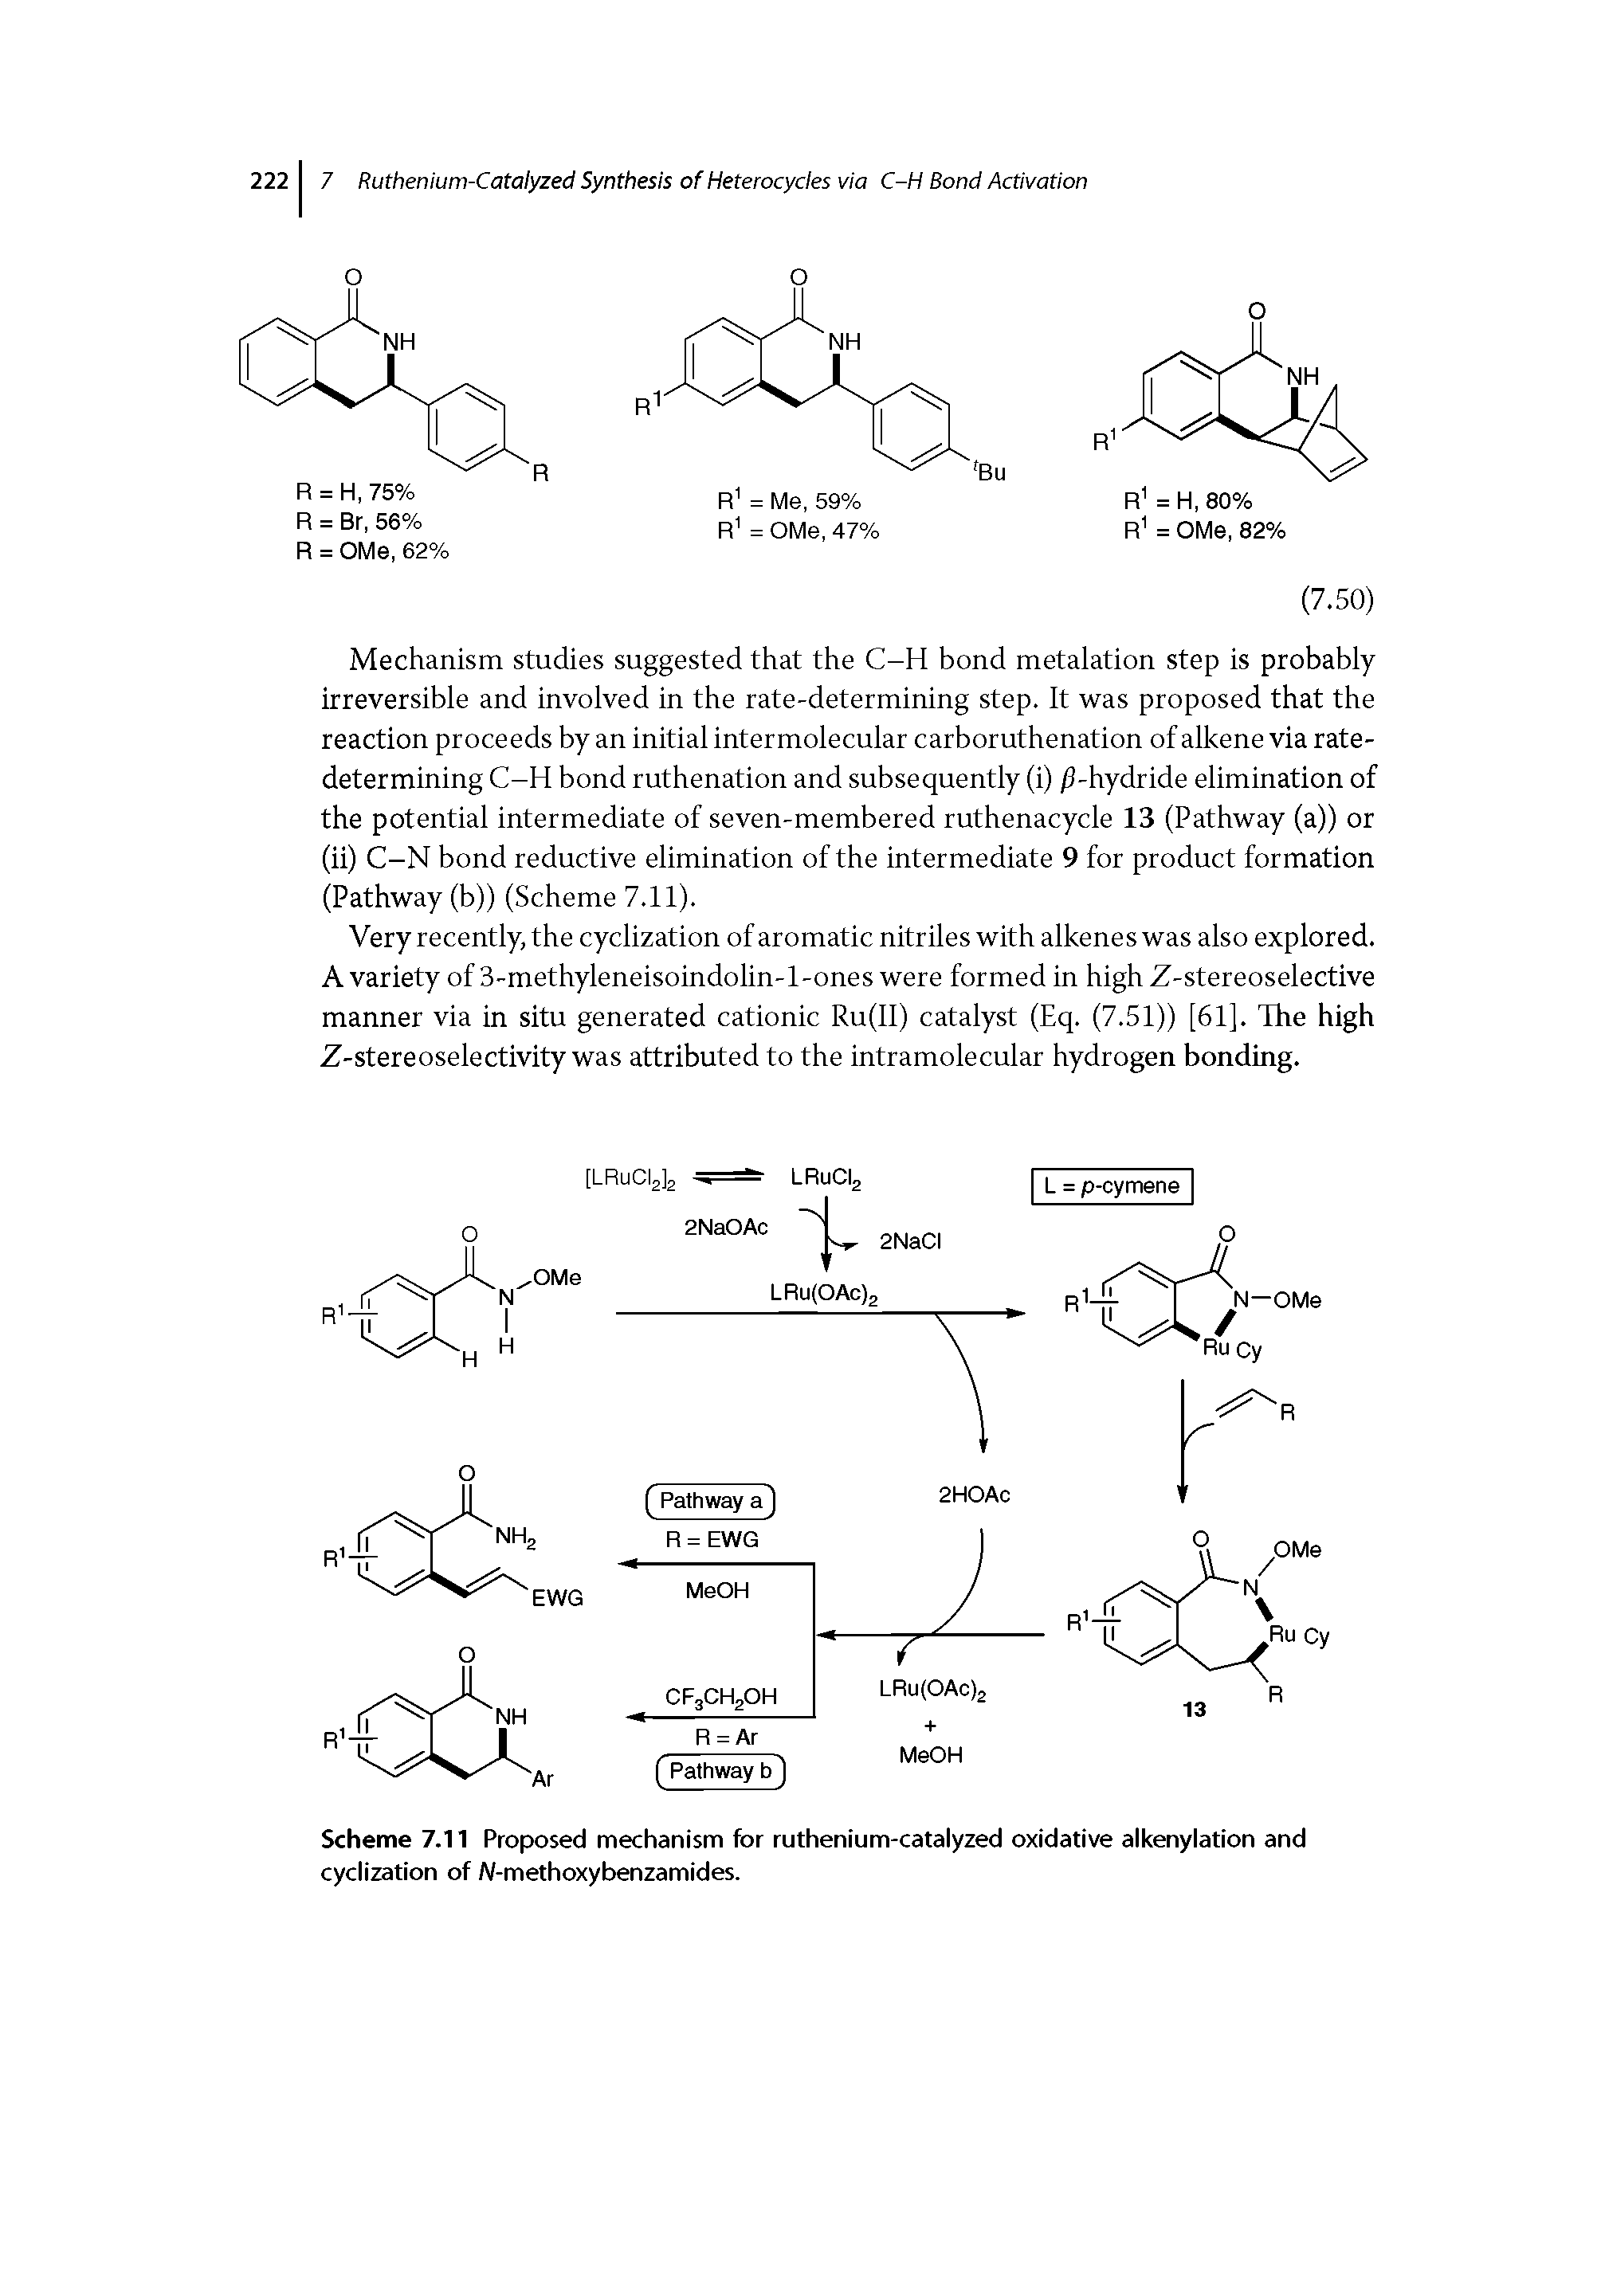 Scheme 7.11 Proposed mechanism for ruthenium-catalyzed oxidative alkenylation and cyclization of N-methoxybenzamides.